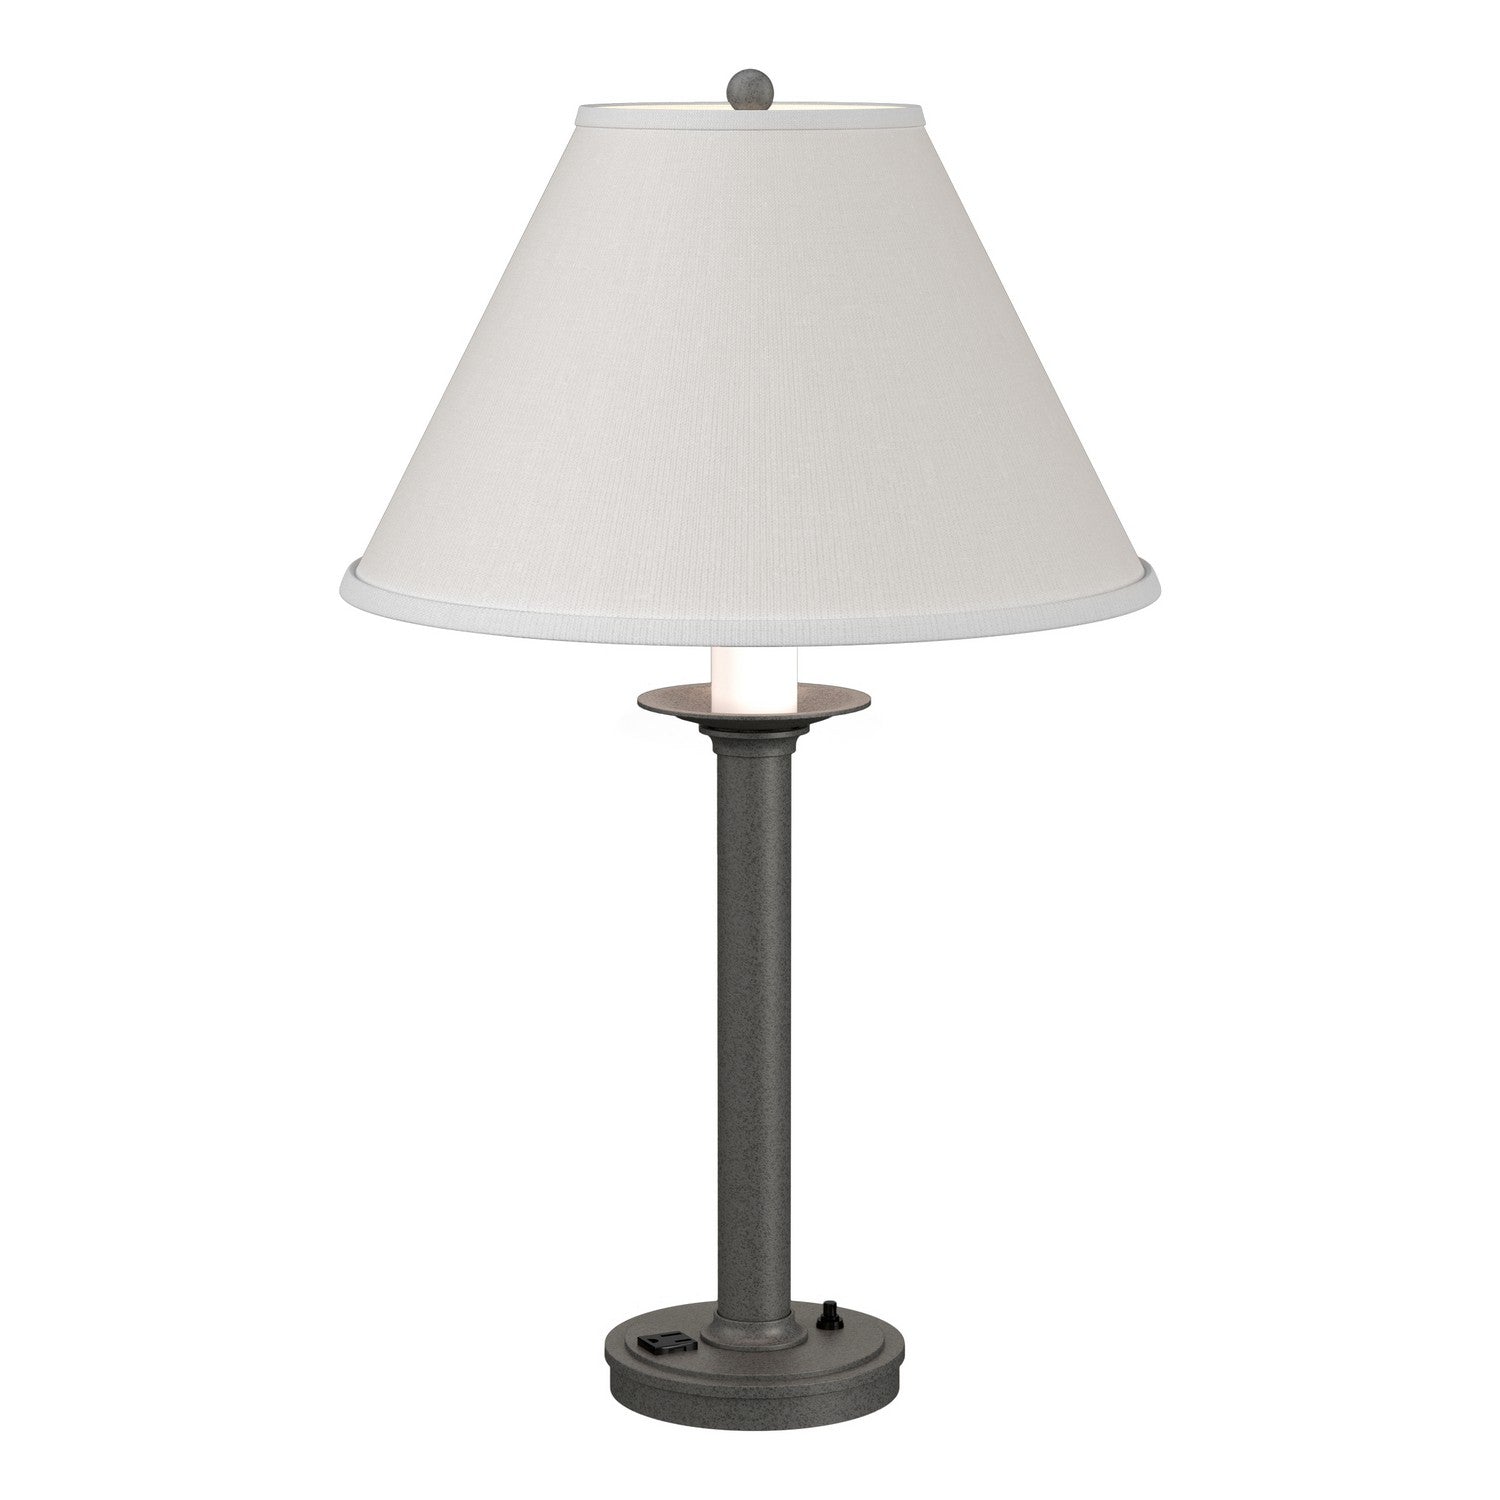 Hubbardton Forge - One Light Table Lamp - Simple Lines - Natural Iron- Union Lighting Luminaires Decor